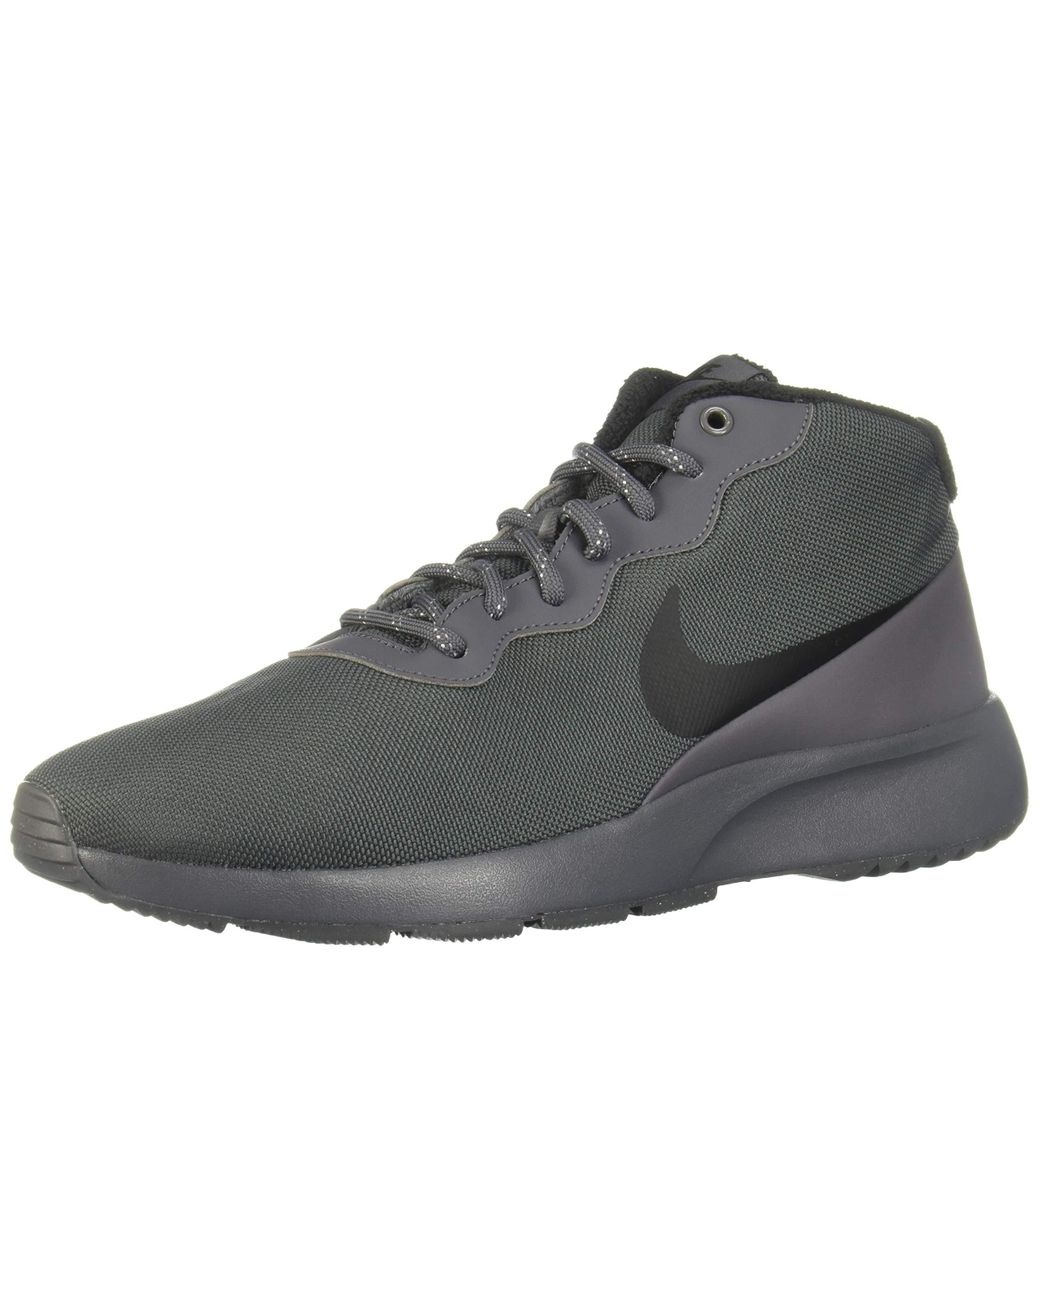 Nike Tanjun Chukka Trail Running Shoes in Grey for Men - Save 17% - Lyst